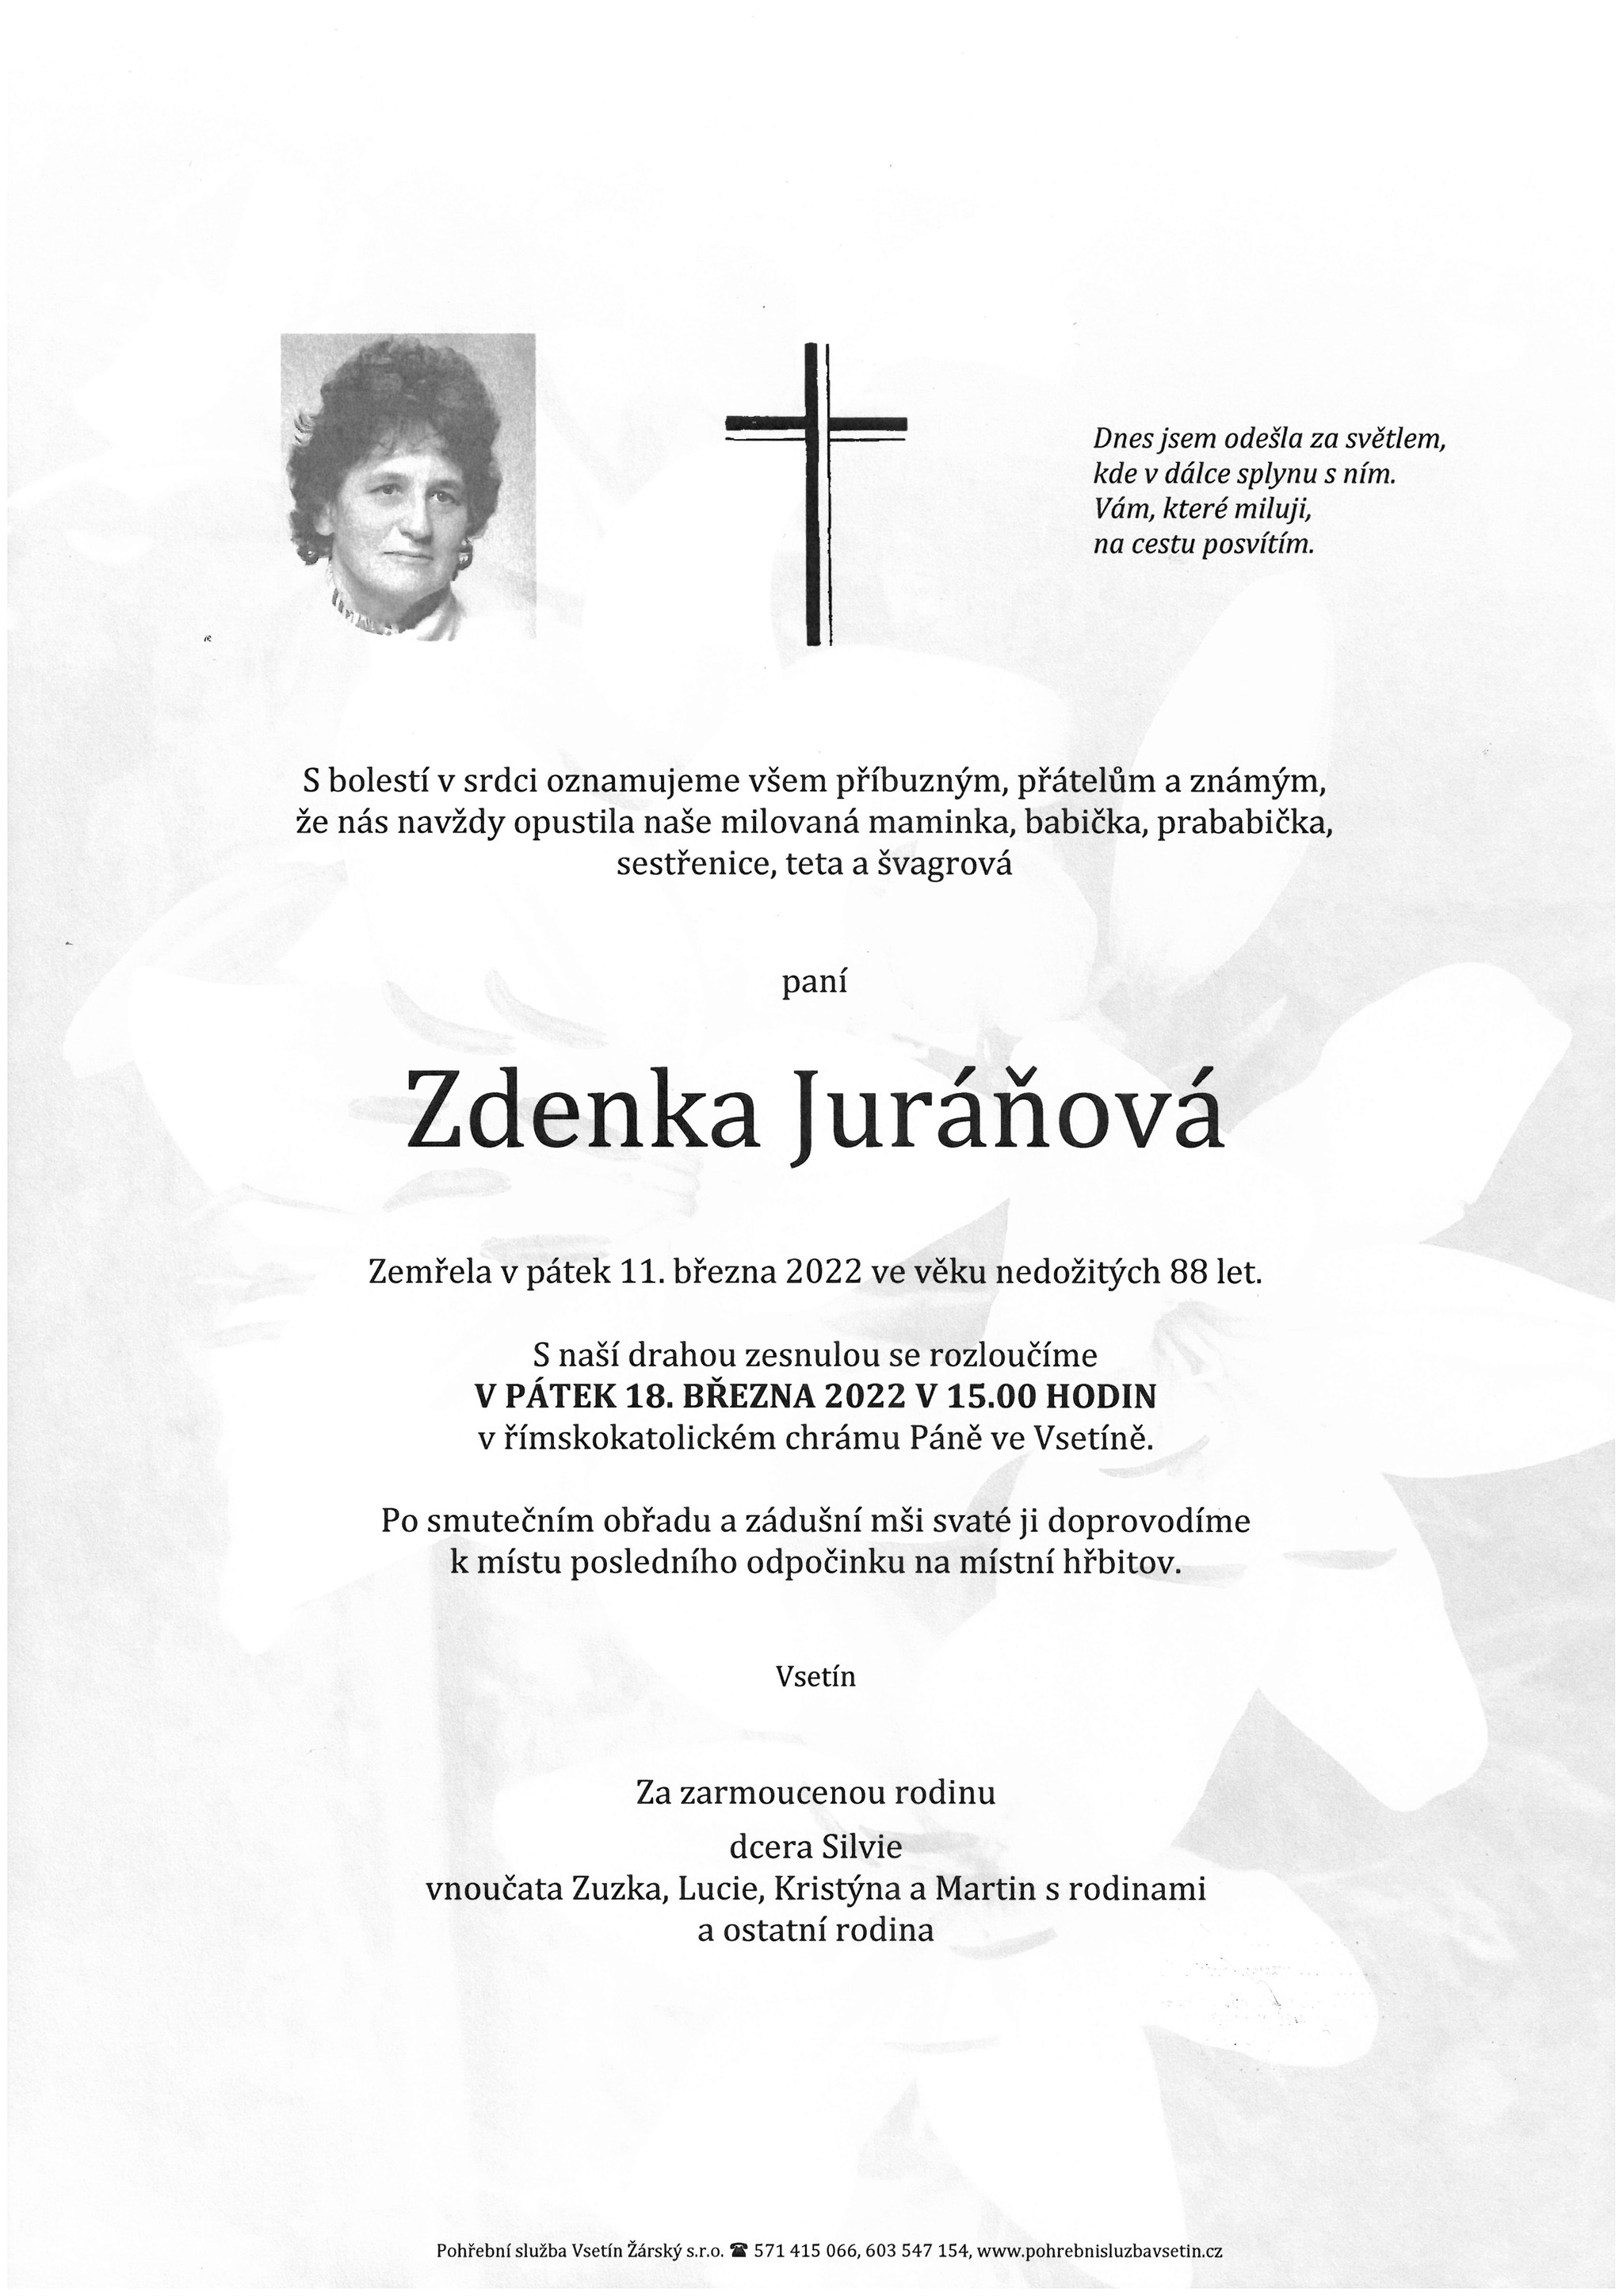 Zdenka Juráňová